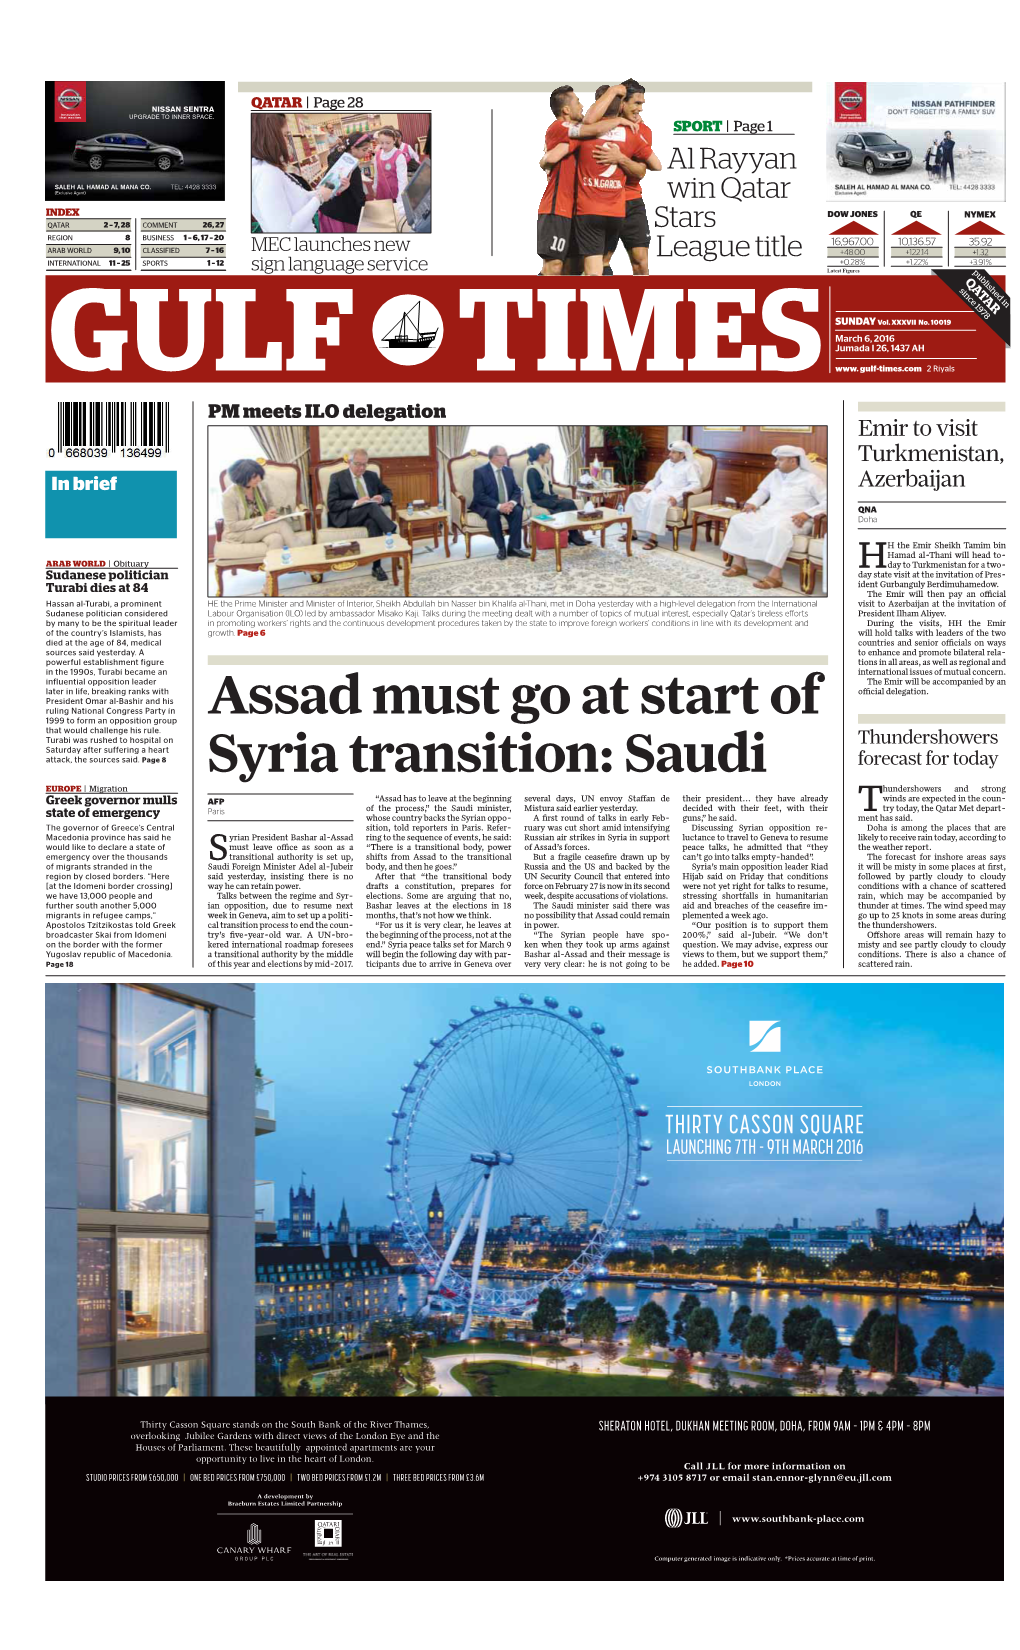 Assad Must Go at Start of Syria Transition: Saudi